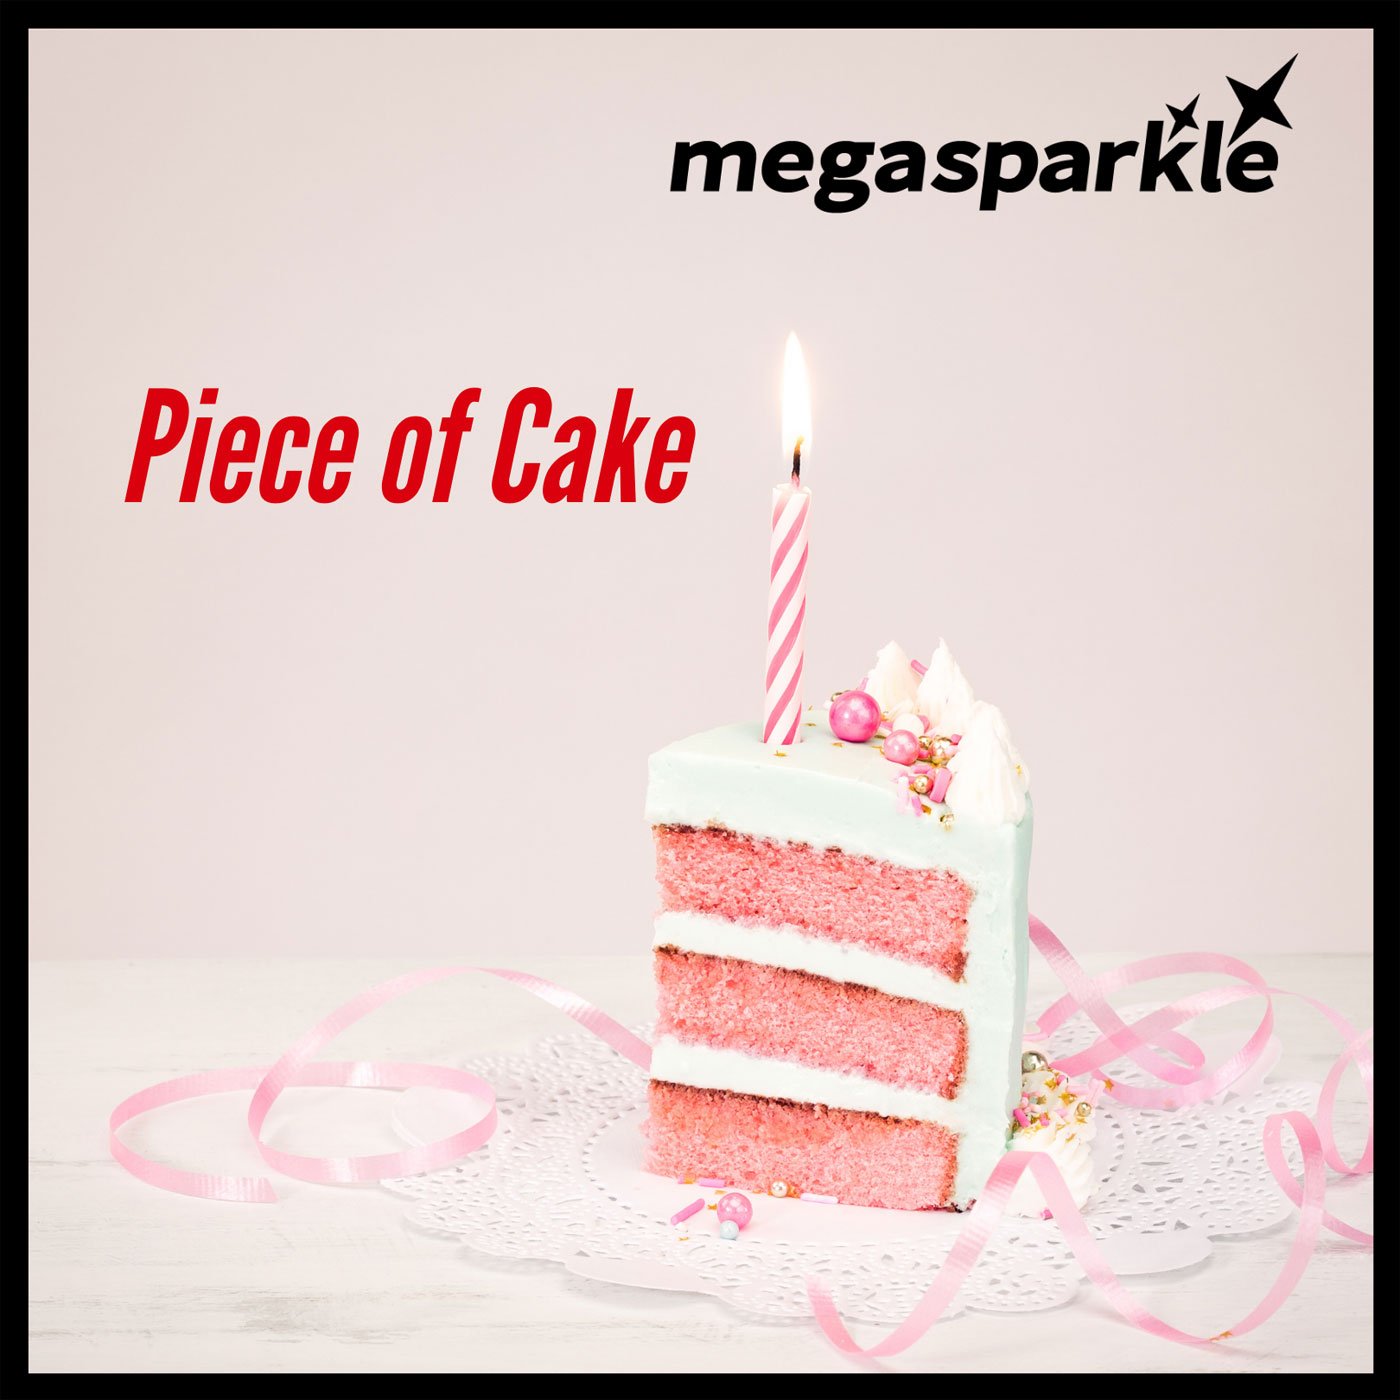 Megasparkle Piece-of-Cake song cover artwork.jpg